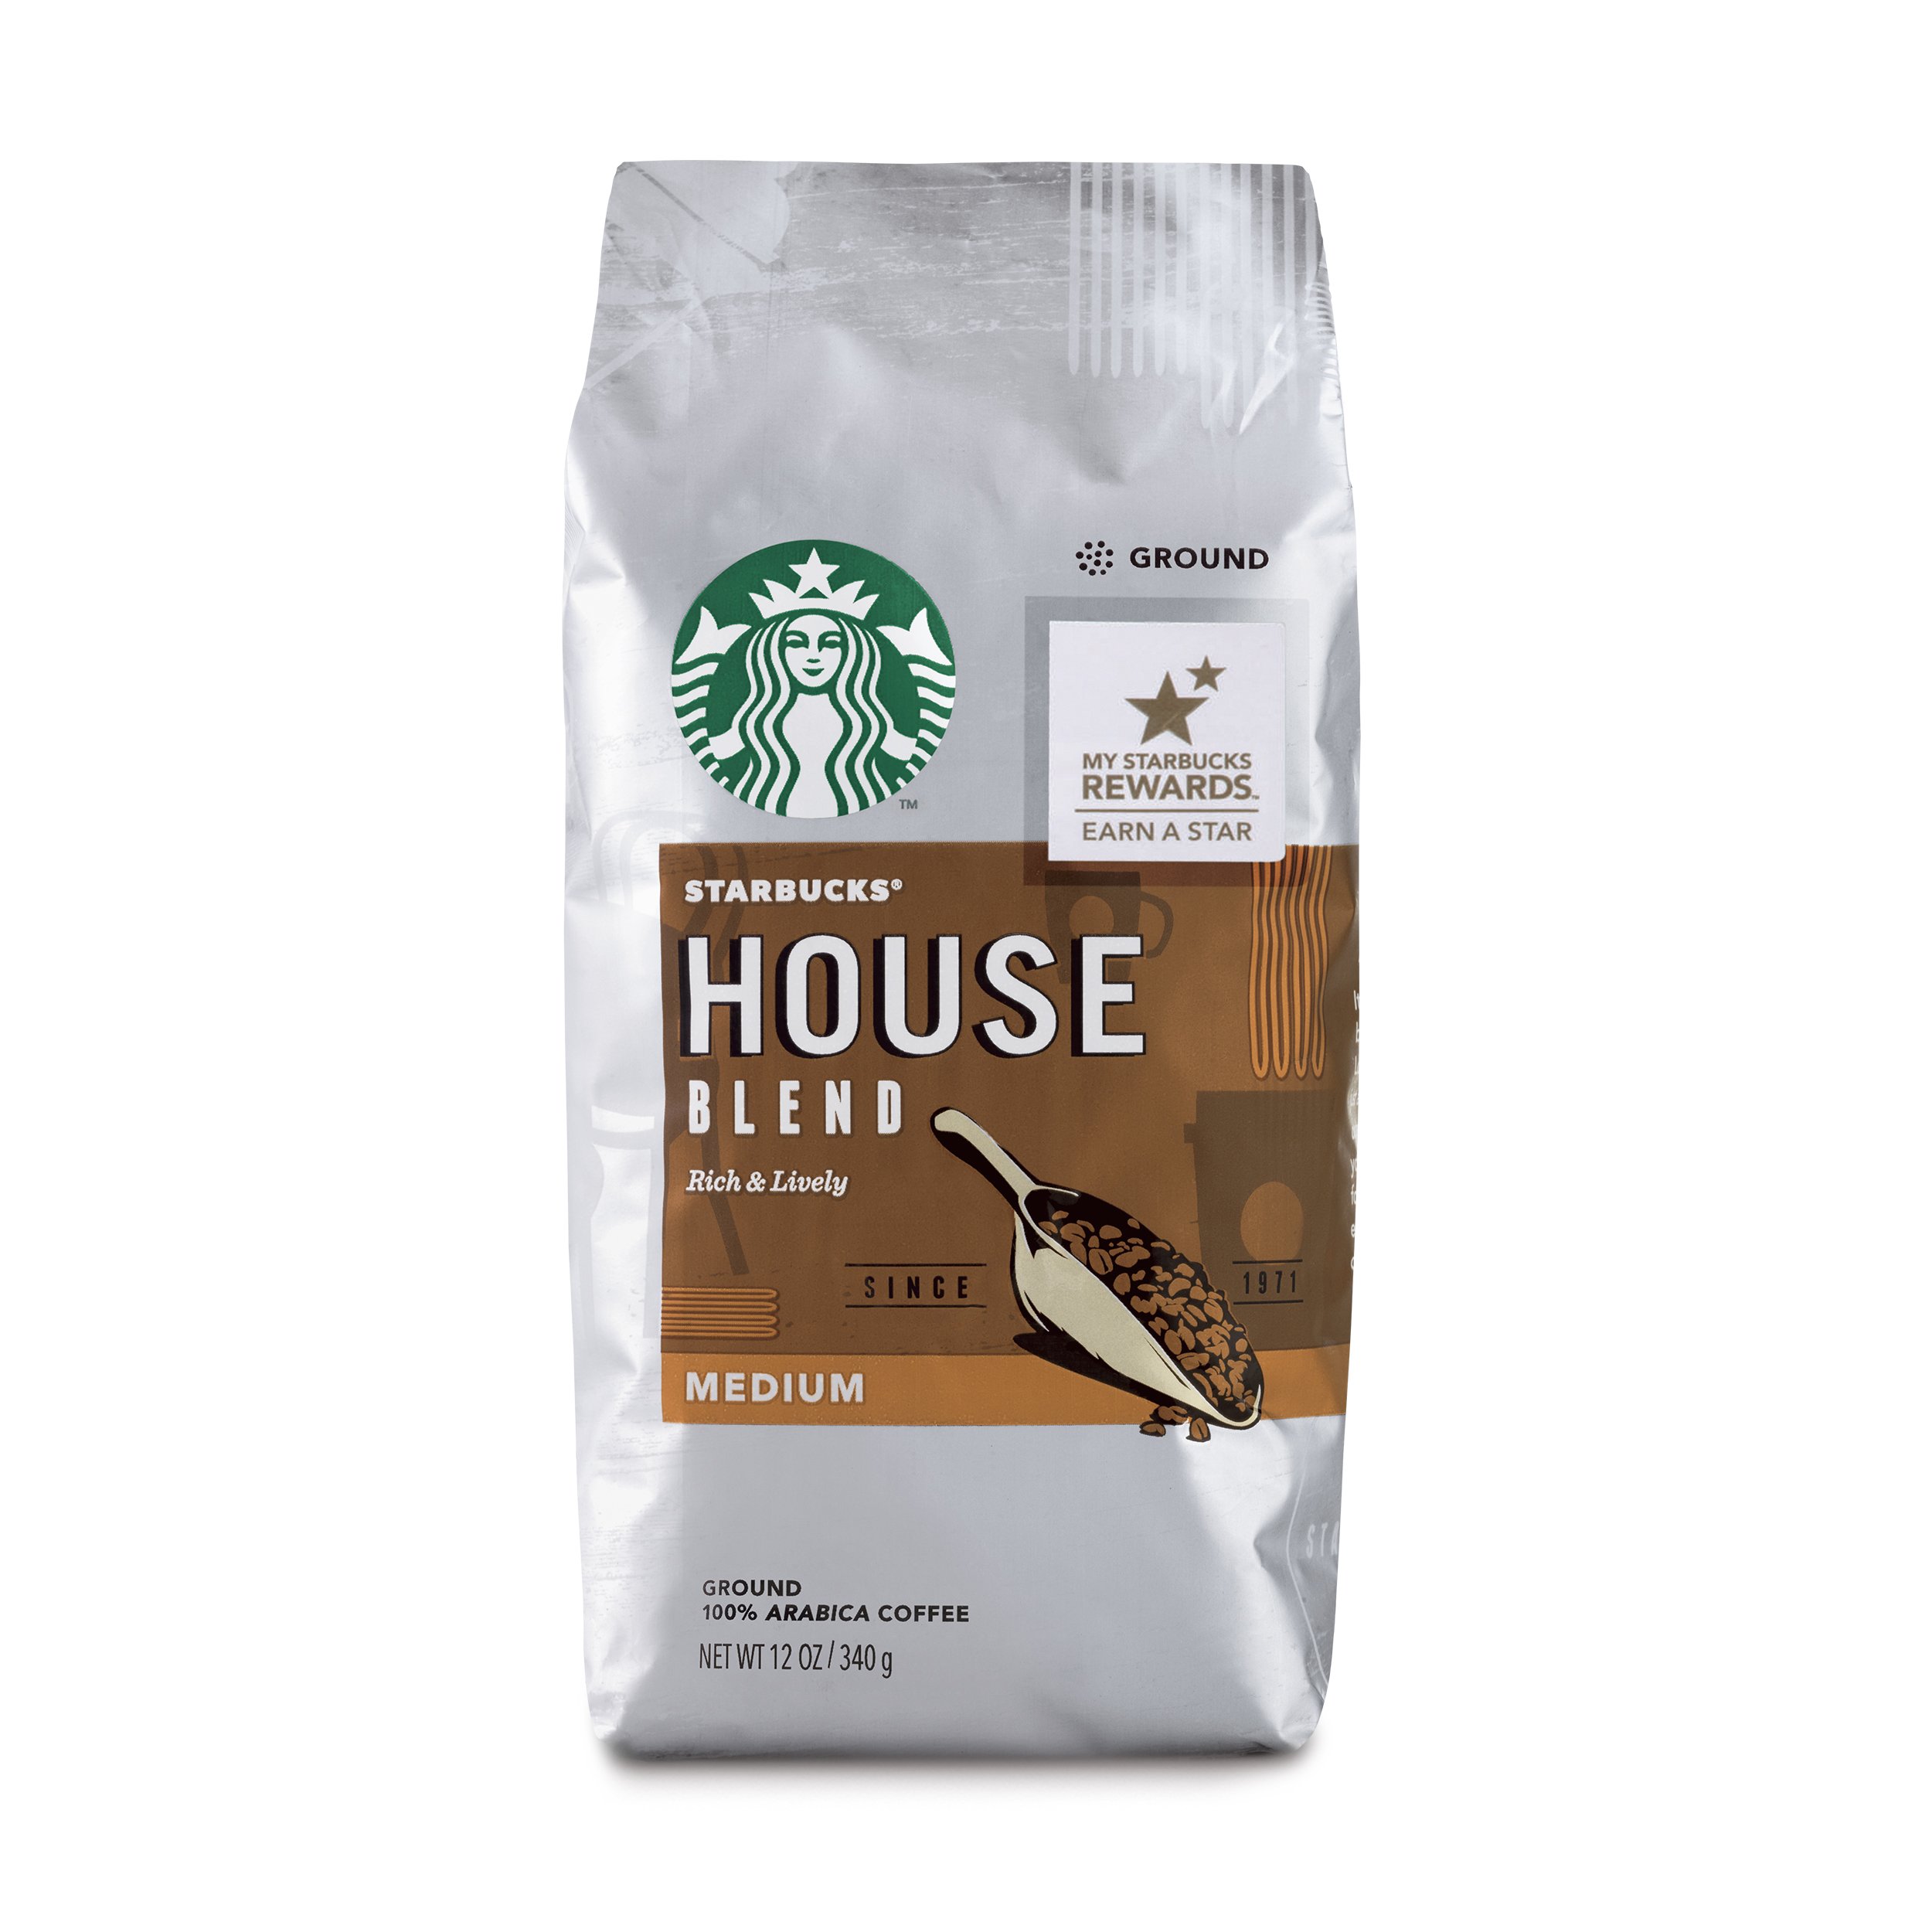 Starbucks Medium House Blend Ground Coffee, 340g/12oz